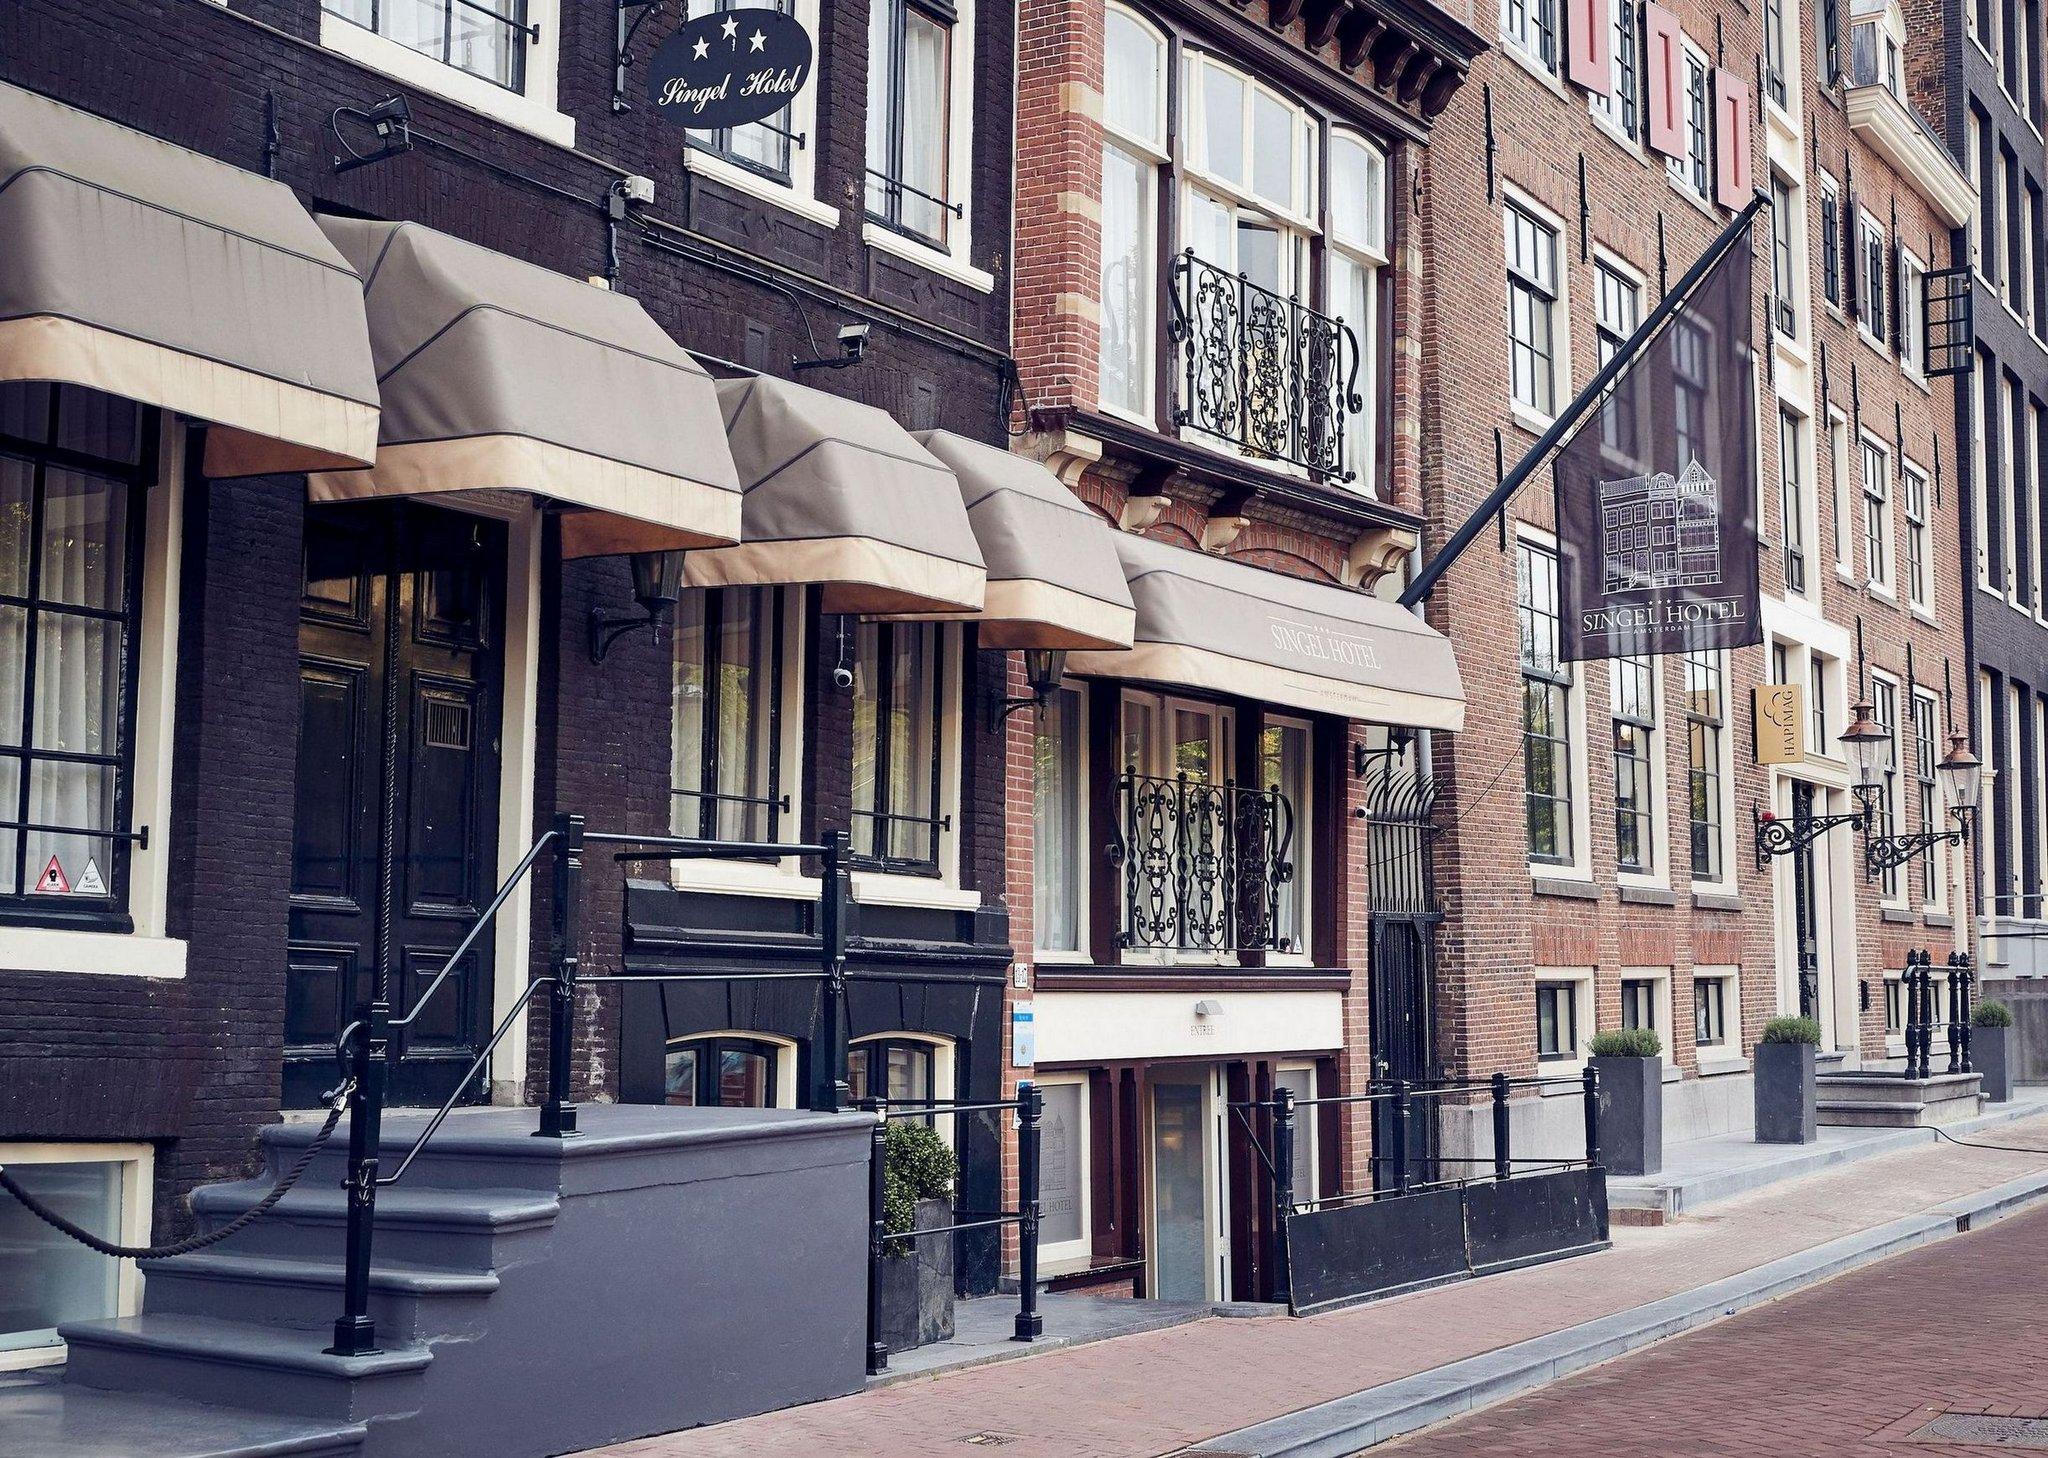 Singel Hotel in Amsterdam, NL